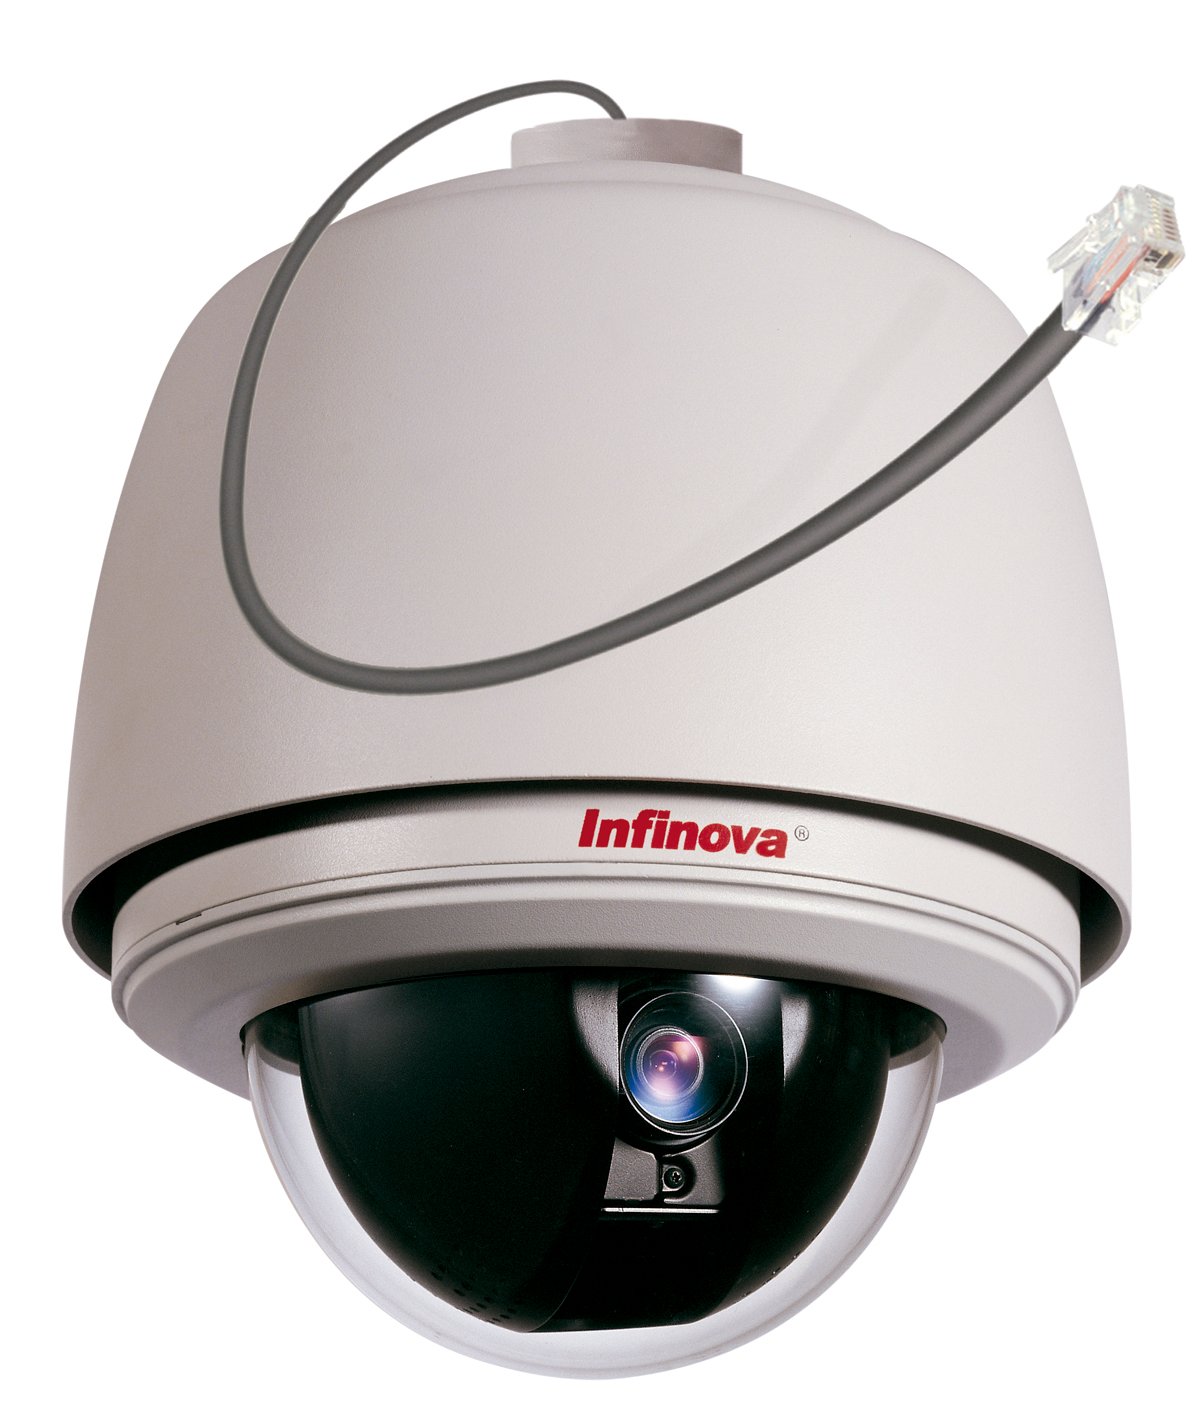 Infinova V1770 high definition (HD) 360 continuous rotation megapixel IP PTZ dome camera 